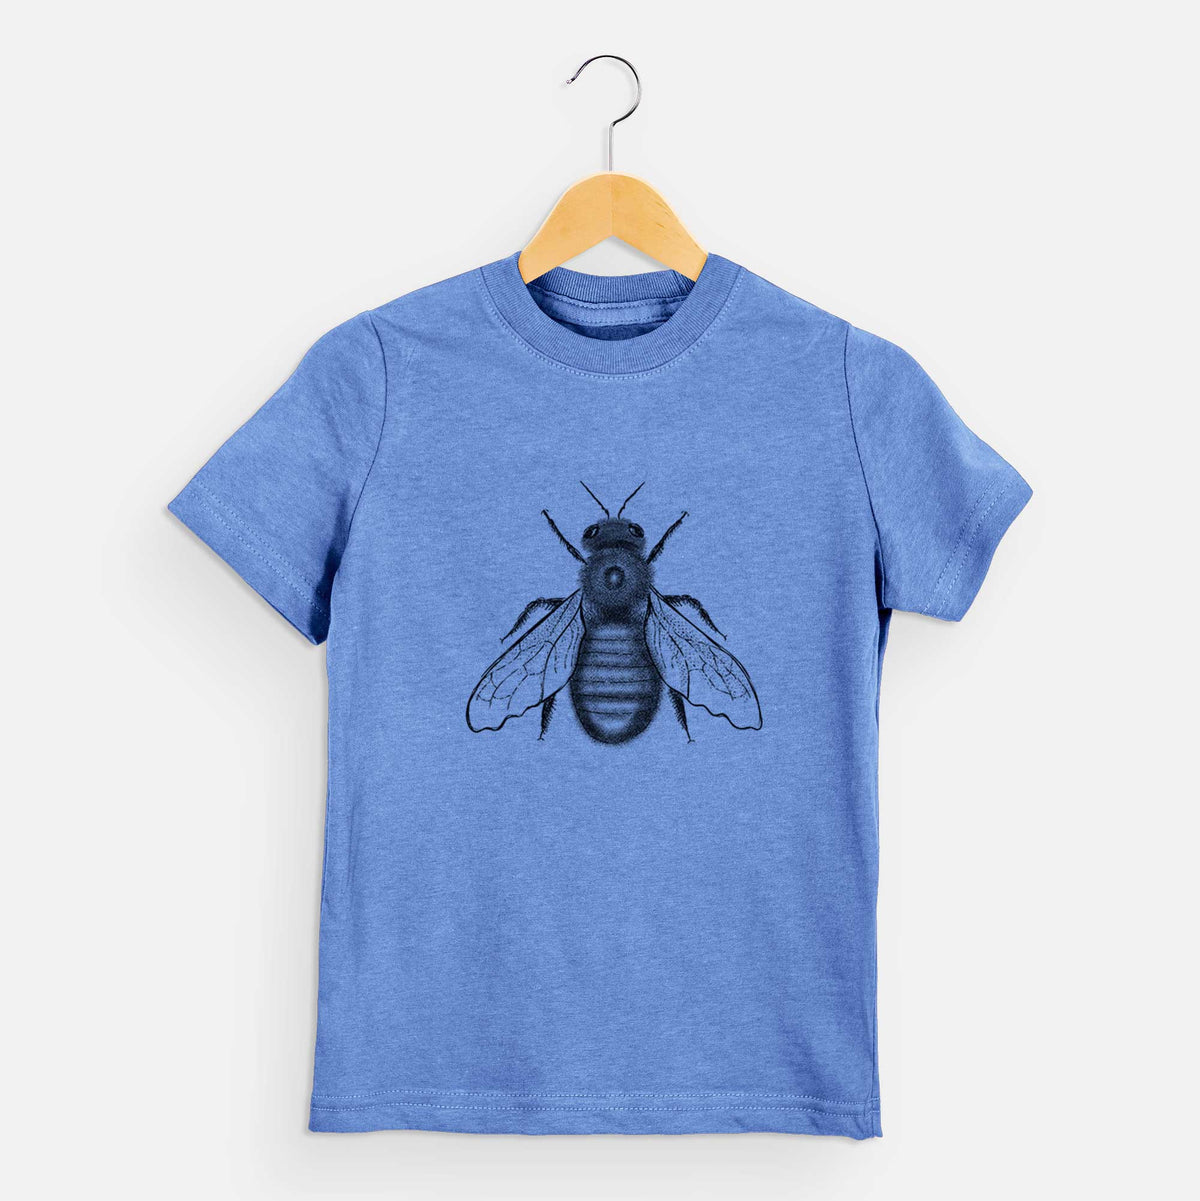 Xylocopa Virginica - Carpenter Bee - Kids Shirt